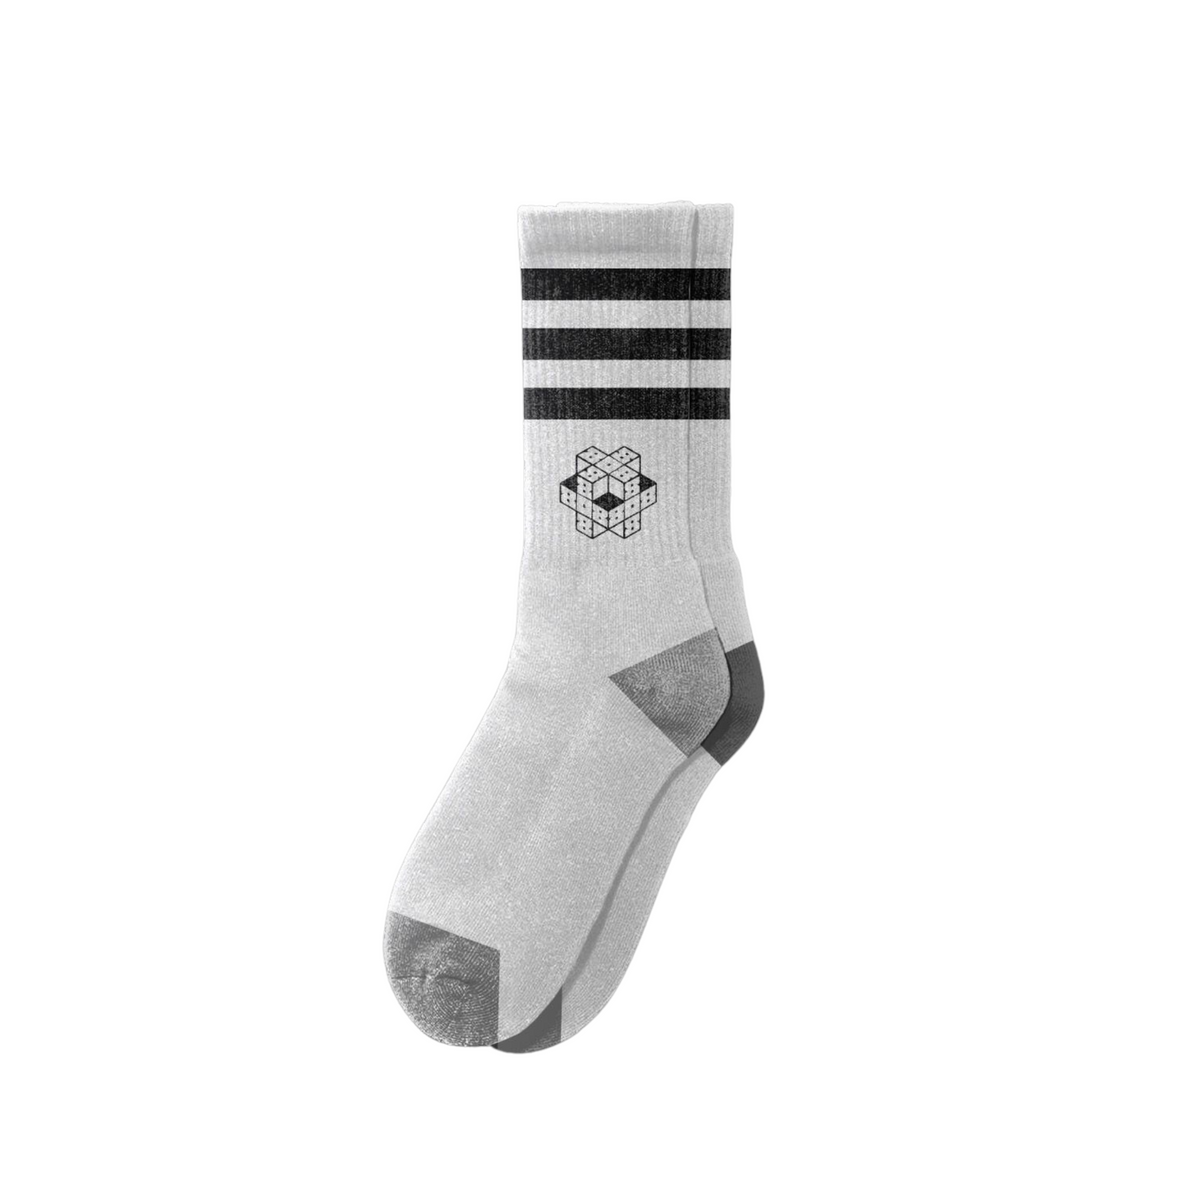 808 White Crew socks (pre-sale)